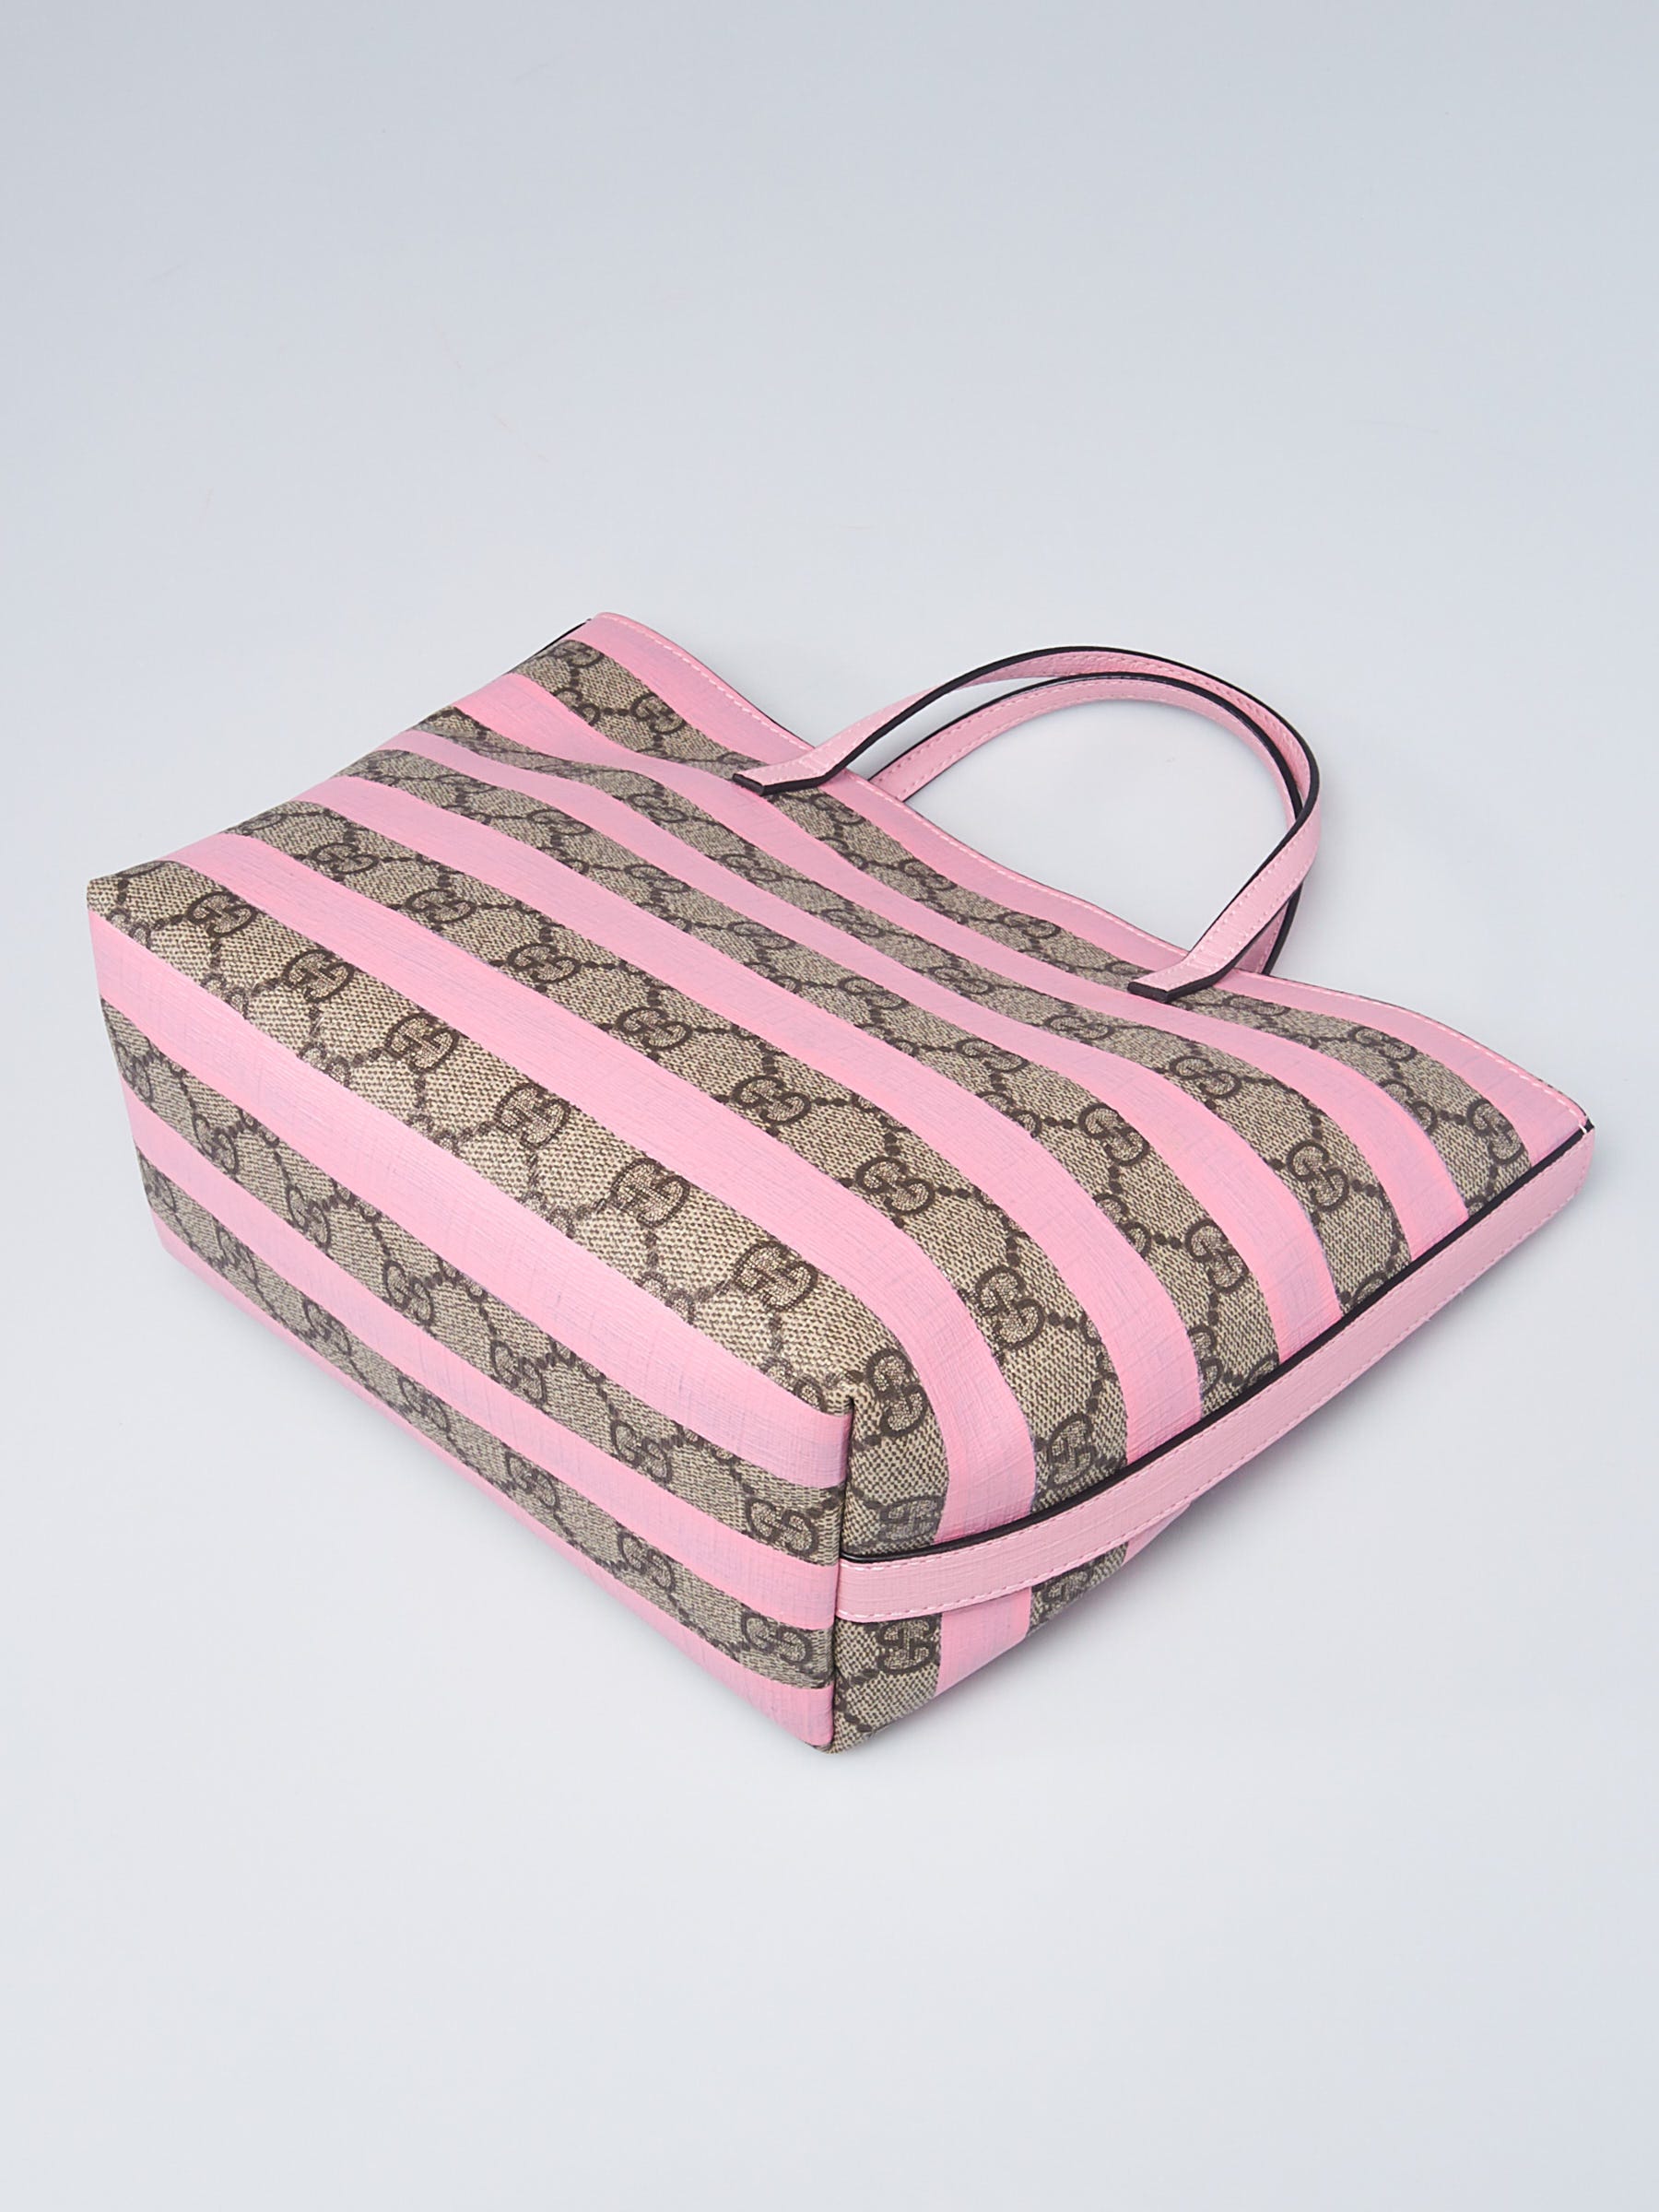 GG Printed Tote Bag in Pink - Gucci Kids